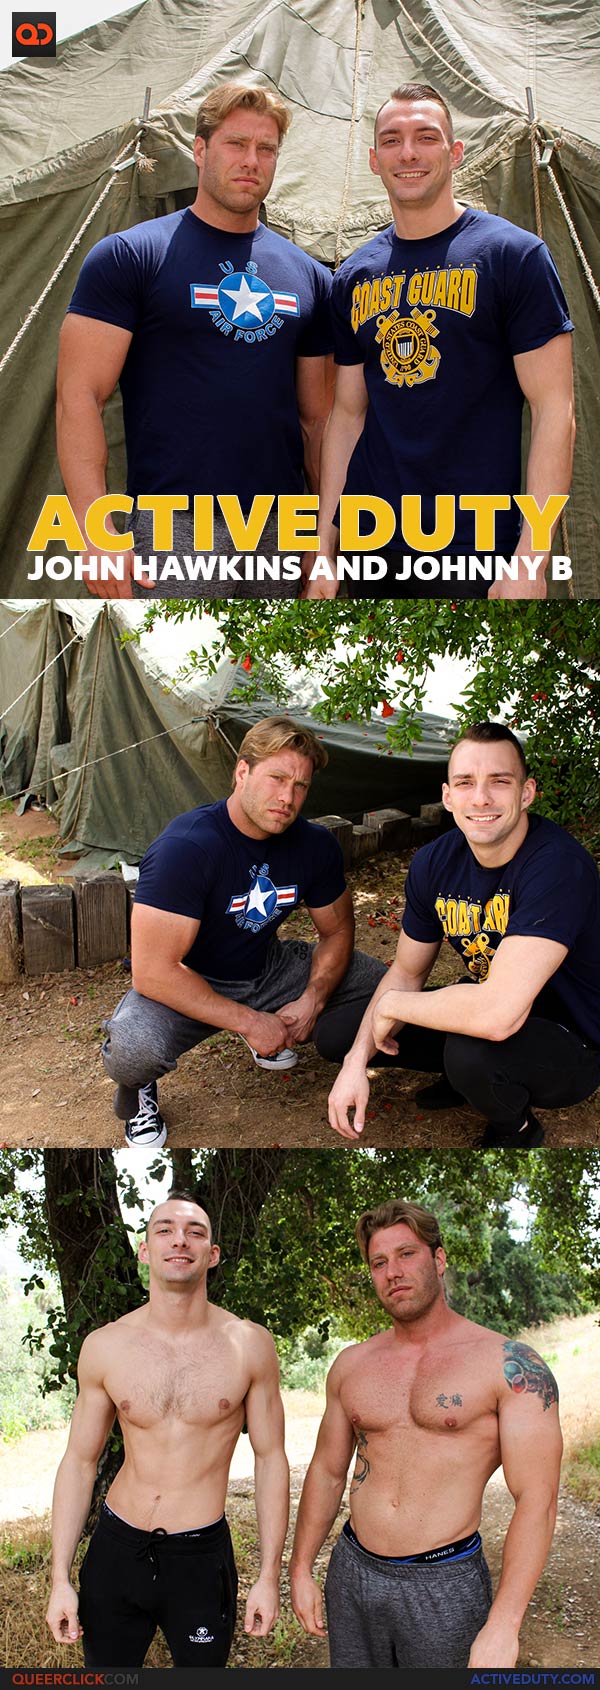 Active Duty: John Hawkins and Johnny B